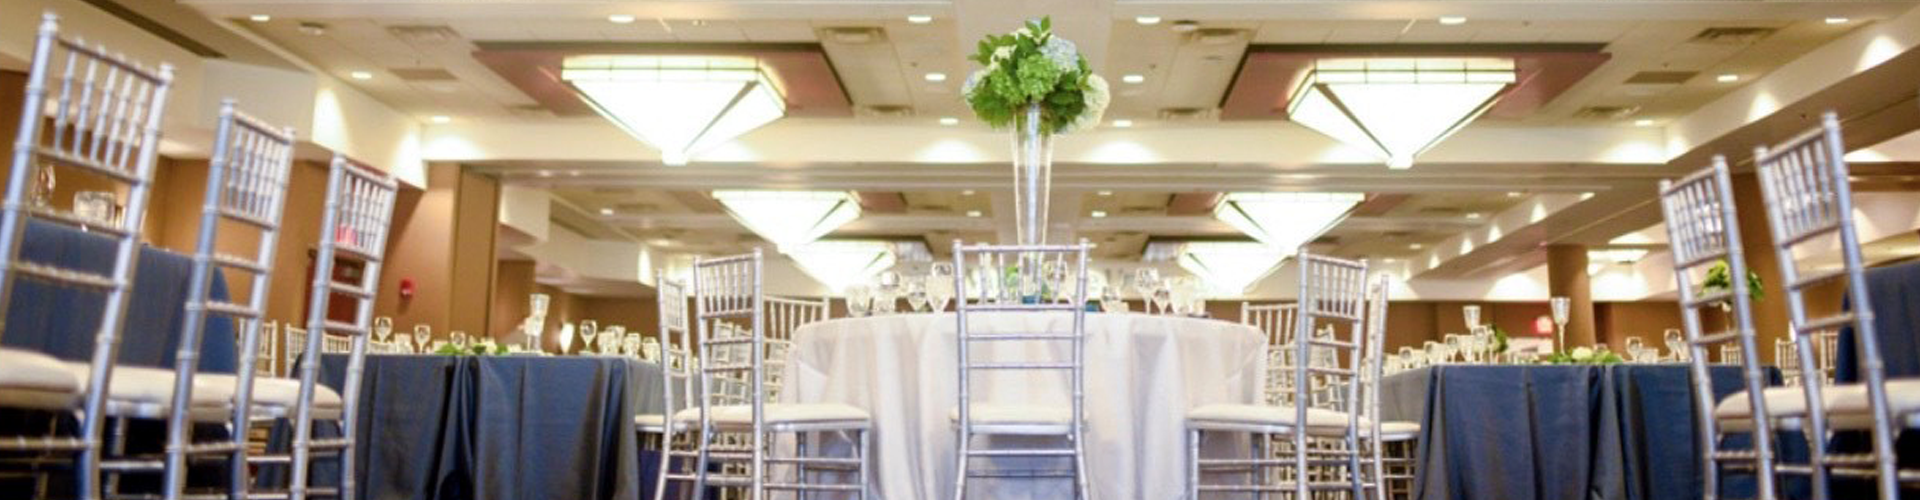 Banquet Room Set up for Blue Wedding Event